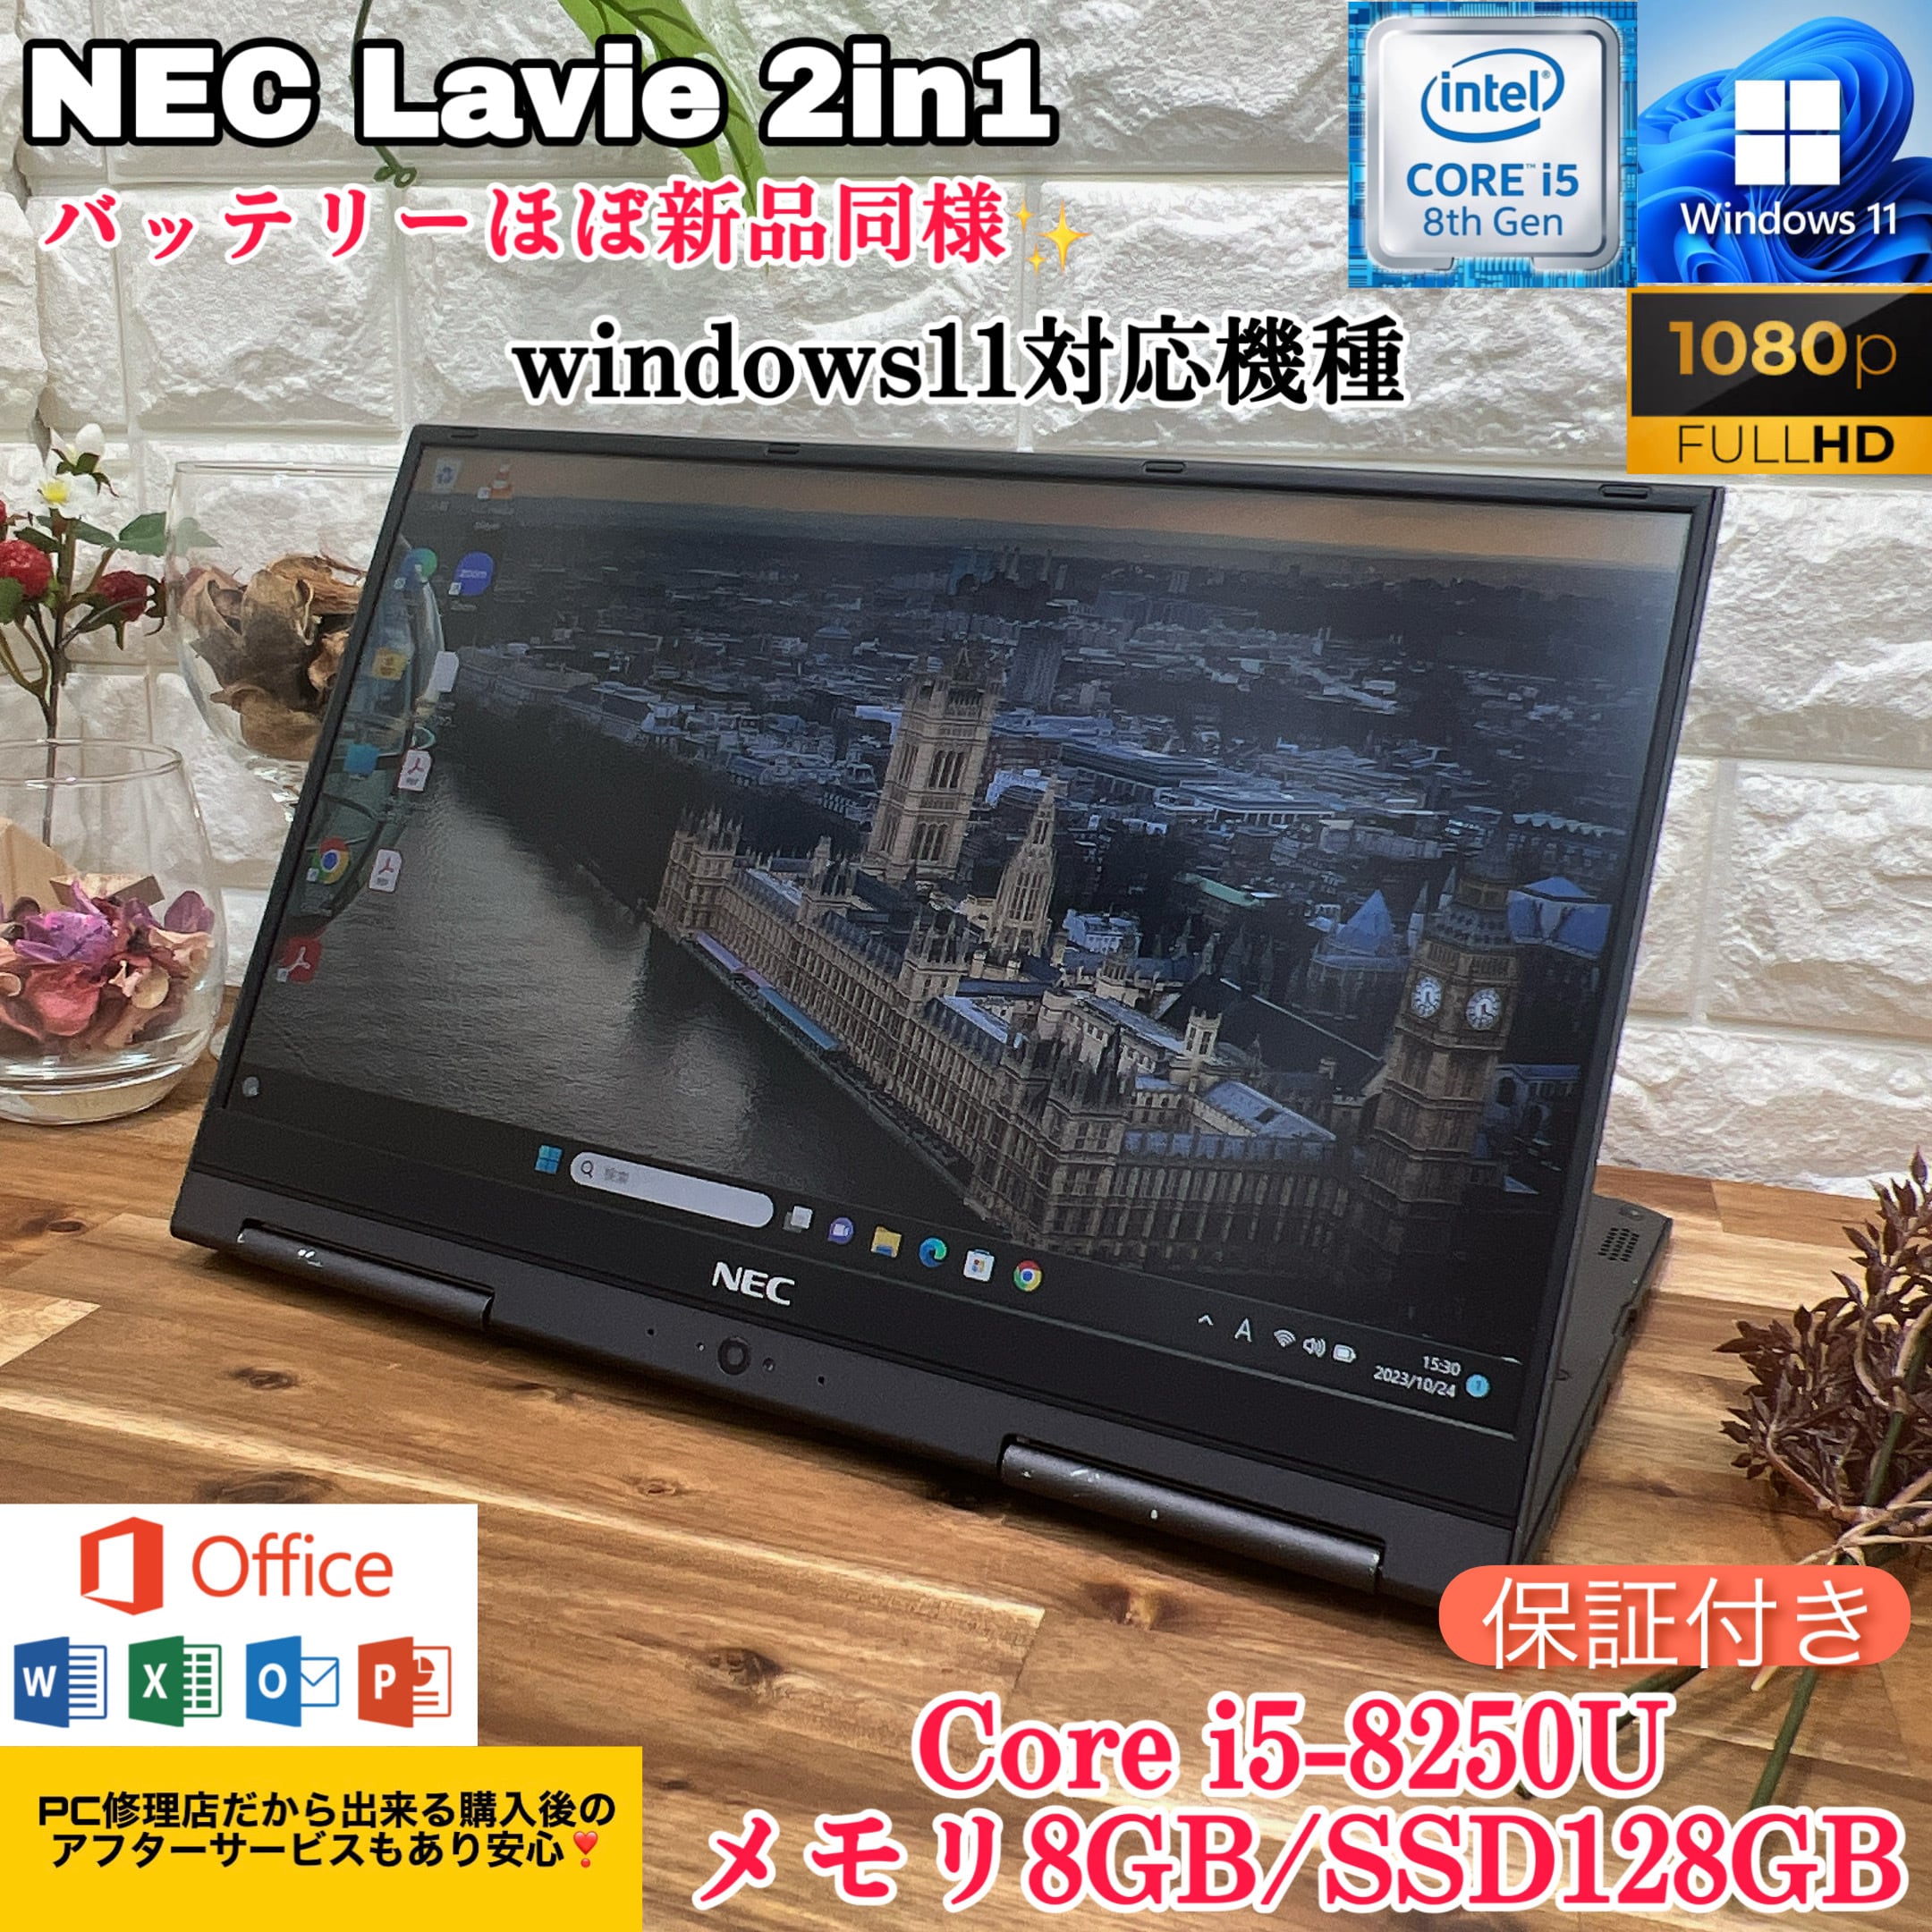 NEC LAVIE 2in1☘️i7第7世代☘️爆速SSD256GB/メモリ8GB